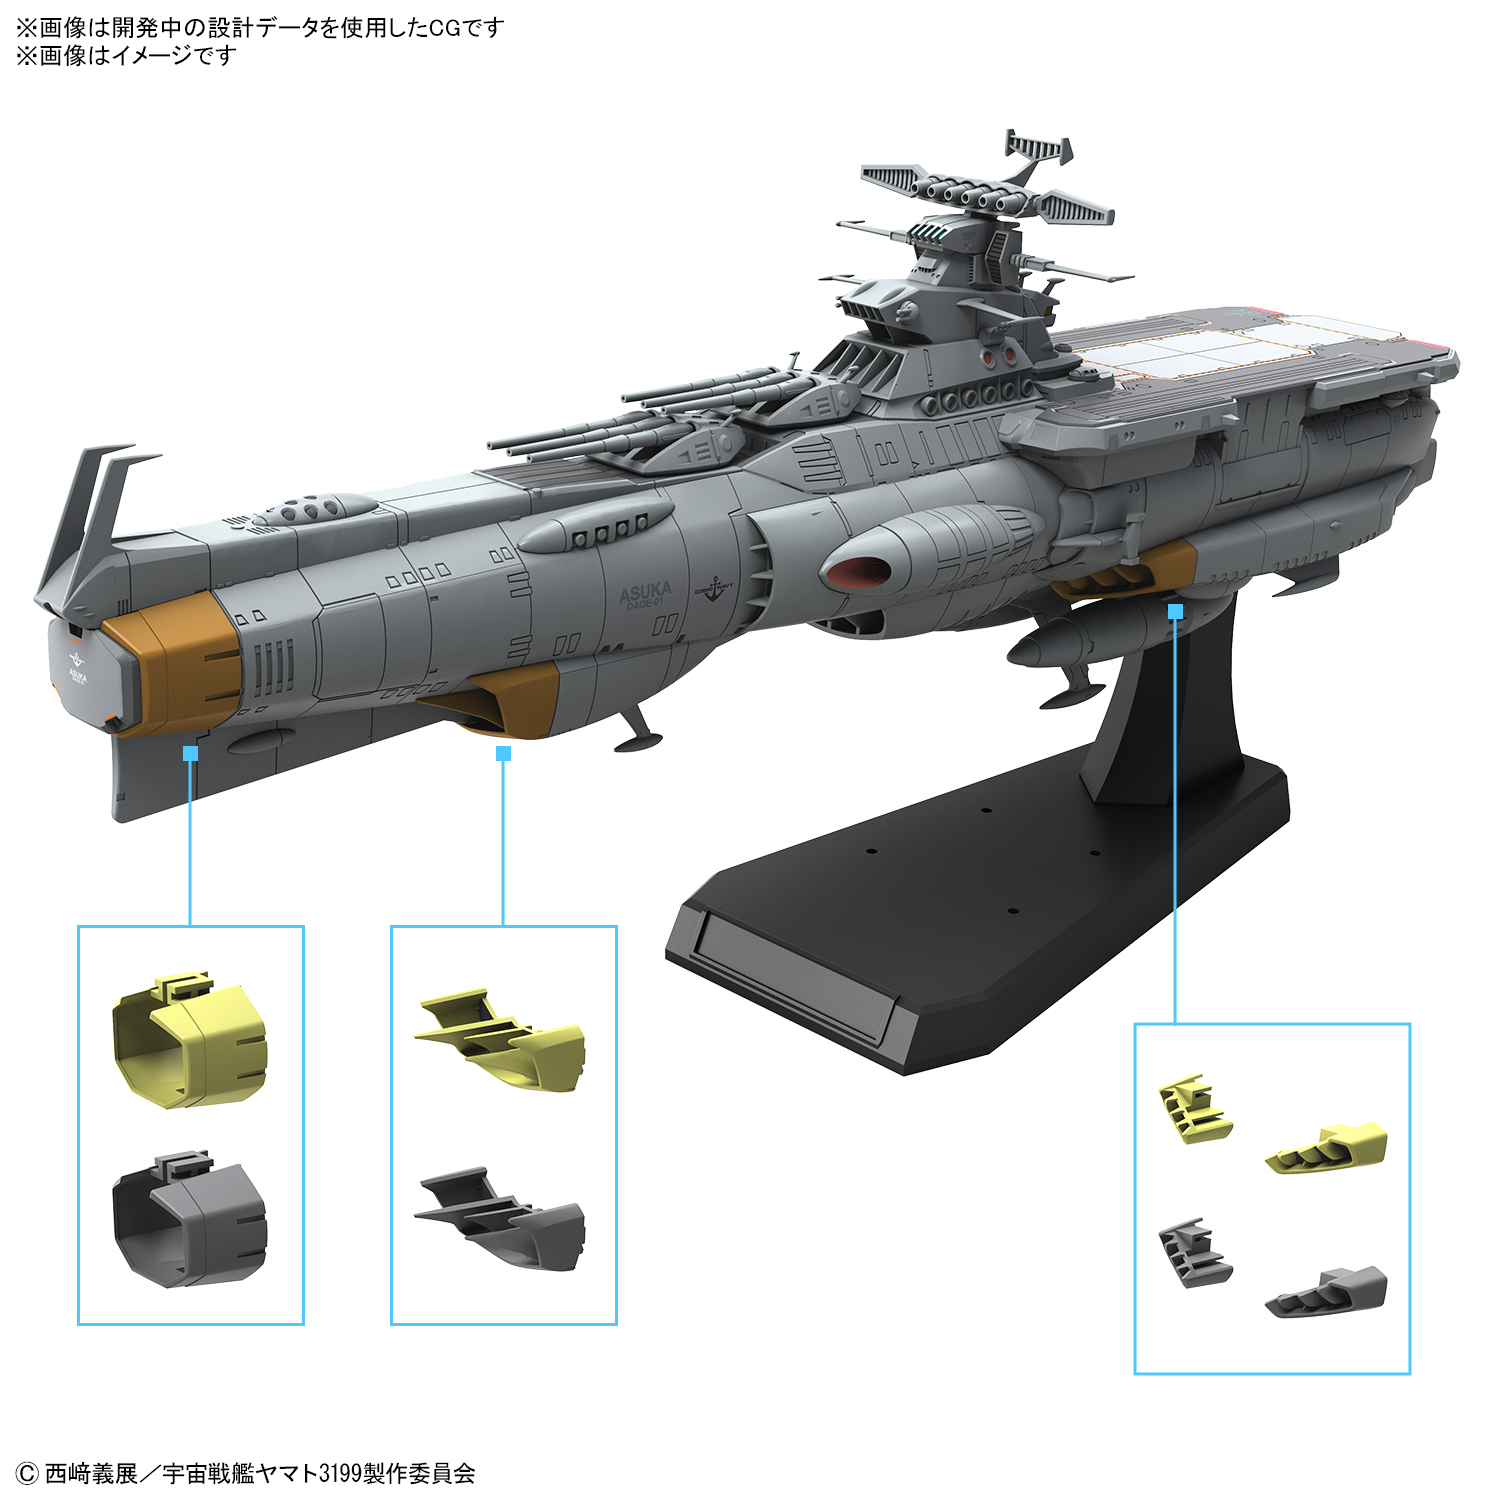 4Kリマスター公開記念 宇宙戦艦ヤマト パンフレット